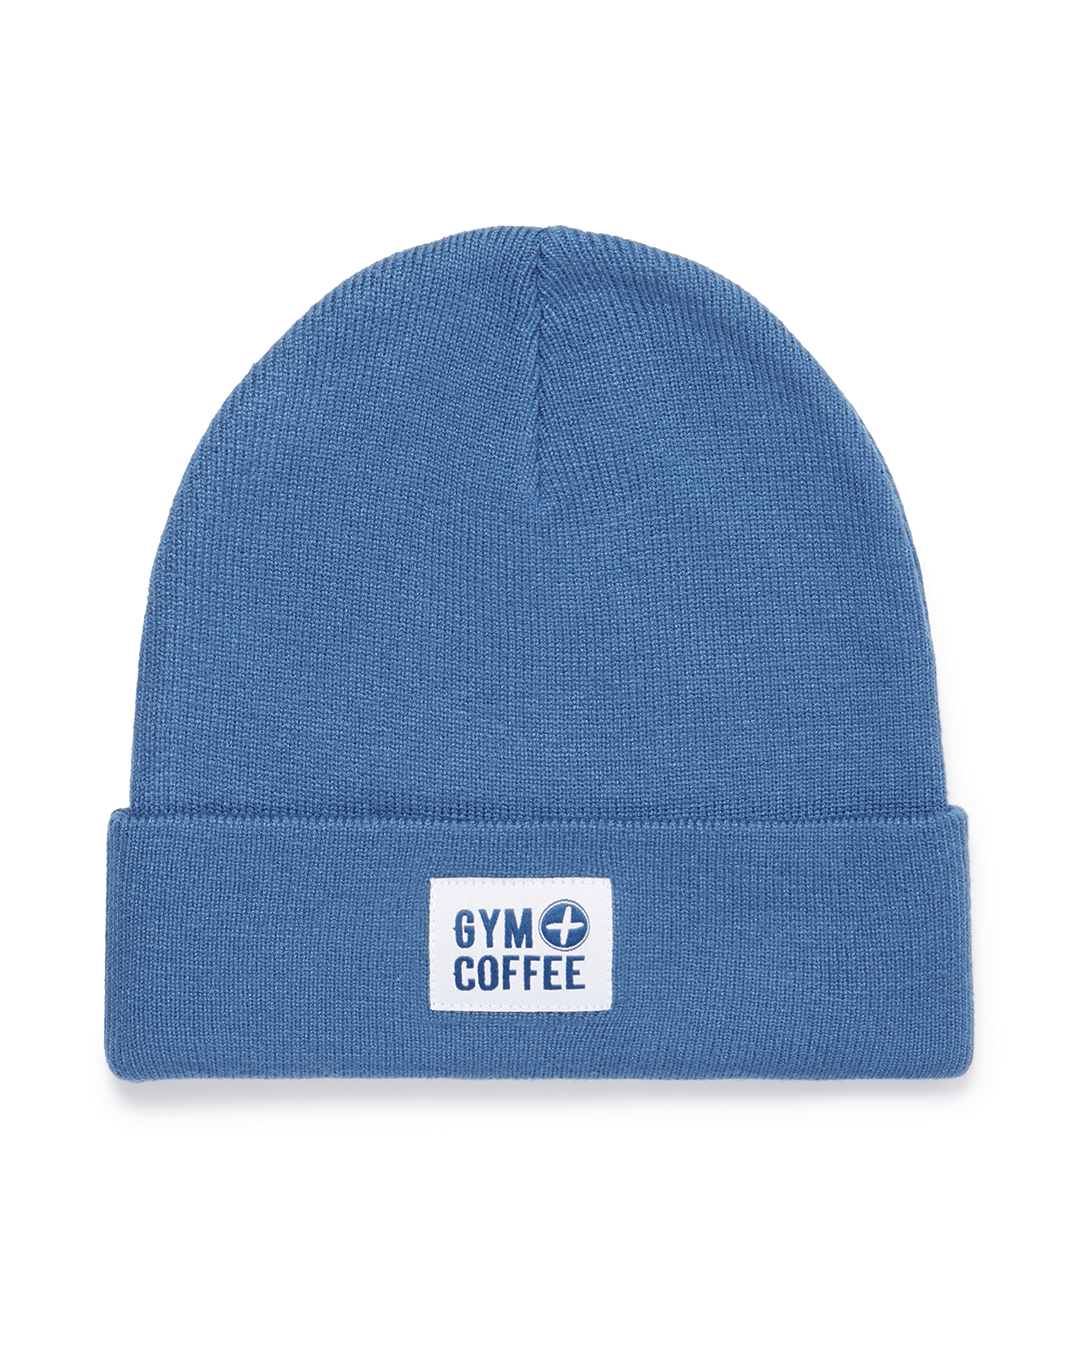 Knit Beanie in True Blue - Beanies - Gym+Coffee IE